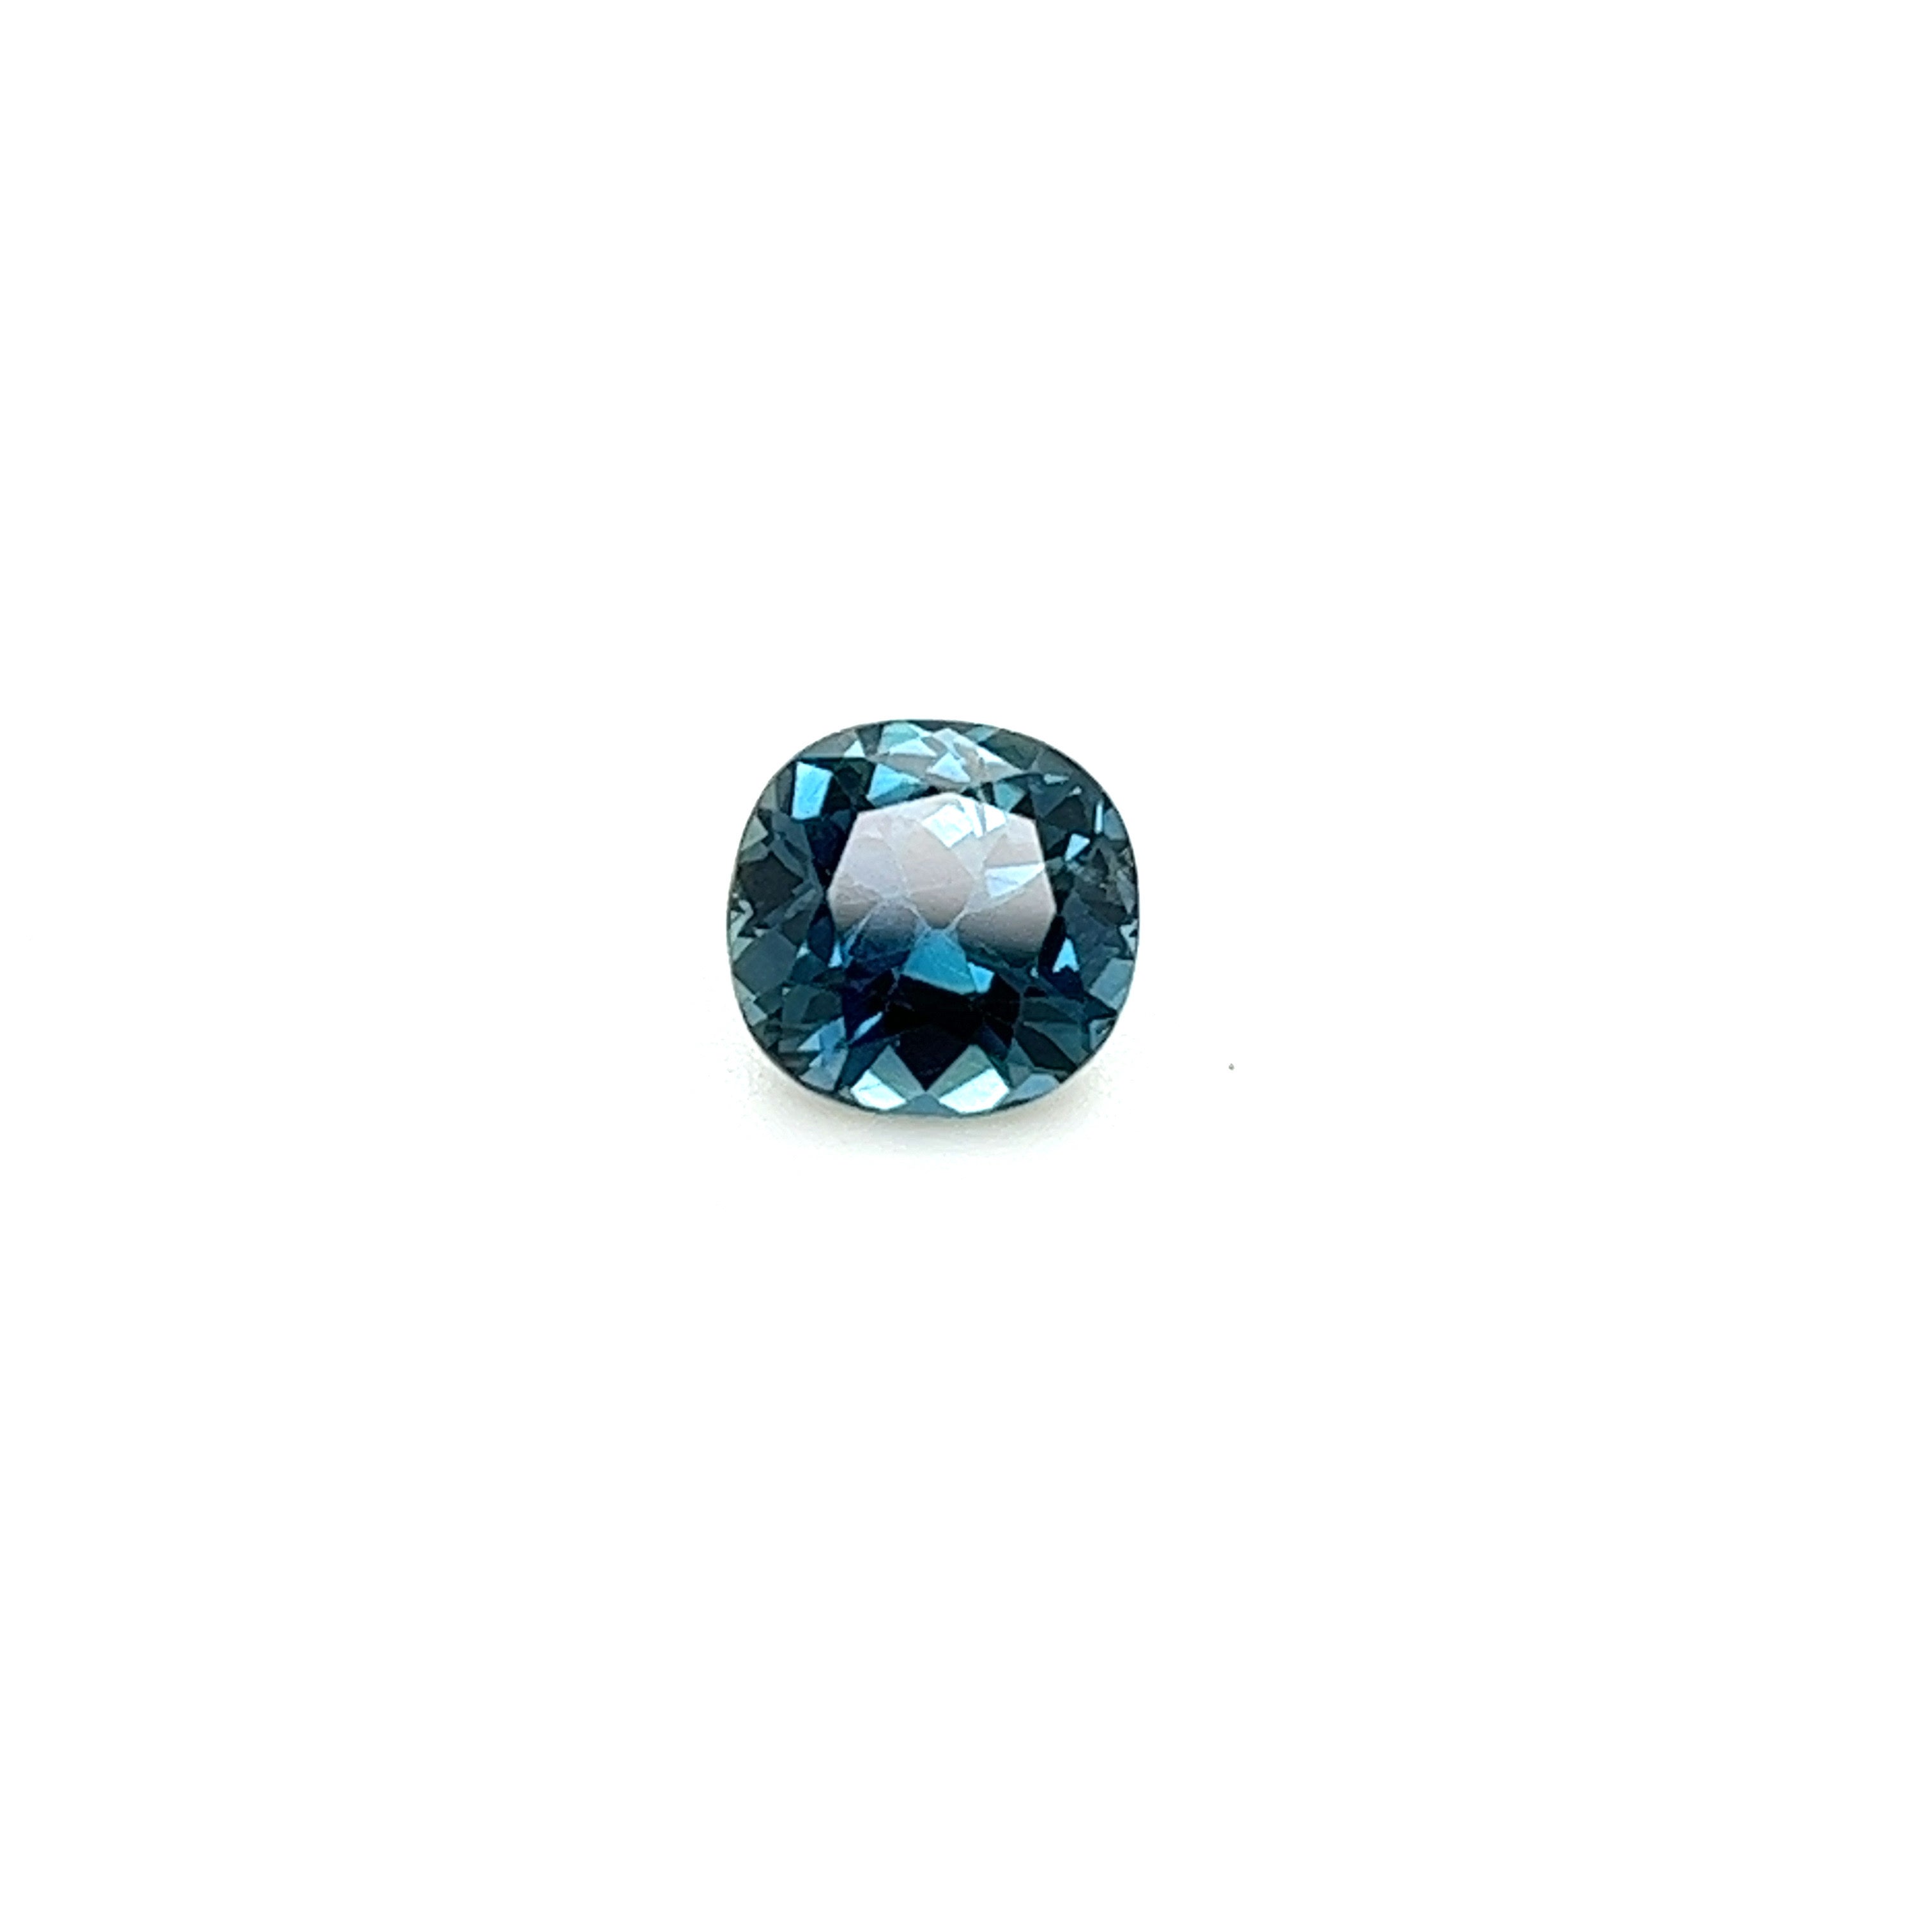 Australia Blue Sapphire Gemstone; Natural Untreated Australia Sapphire, 1.790cts - Mark Oliver Gems